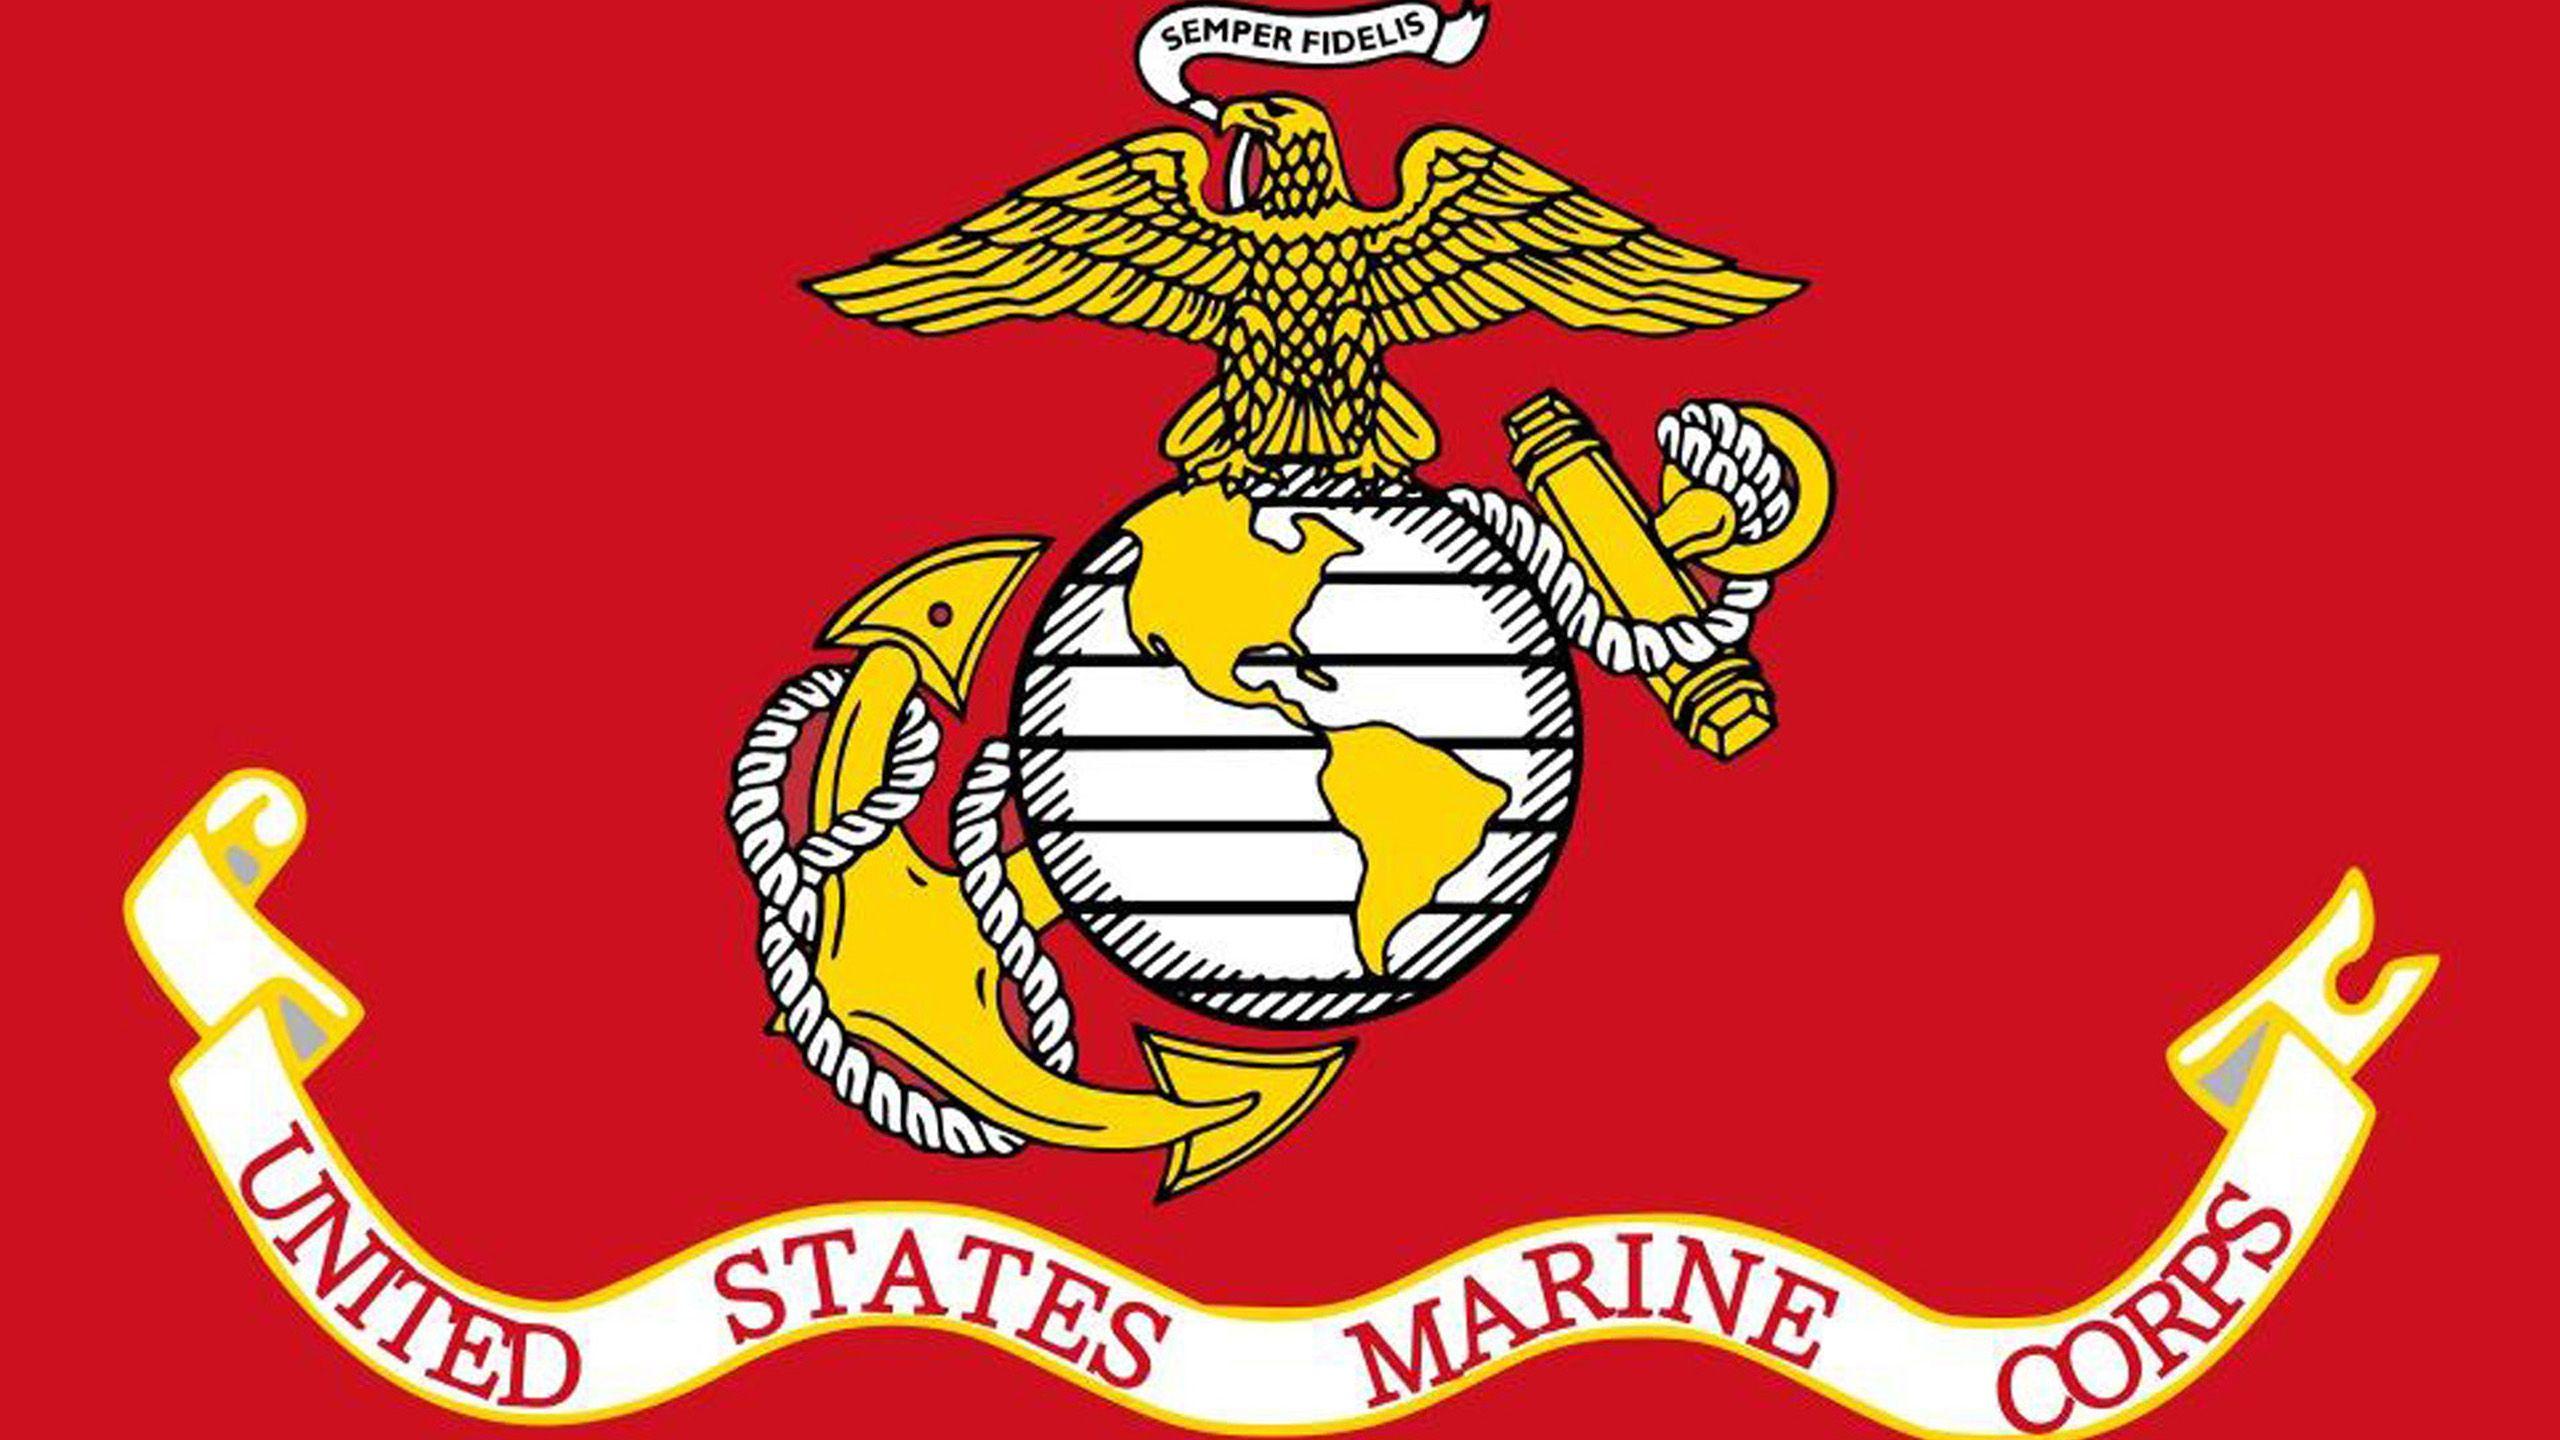 USMC Company Logos